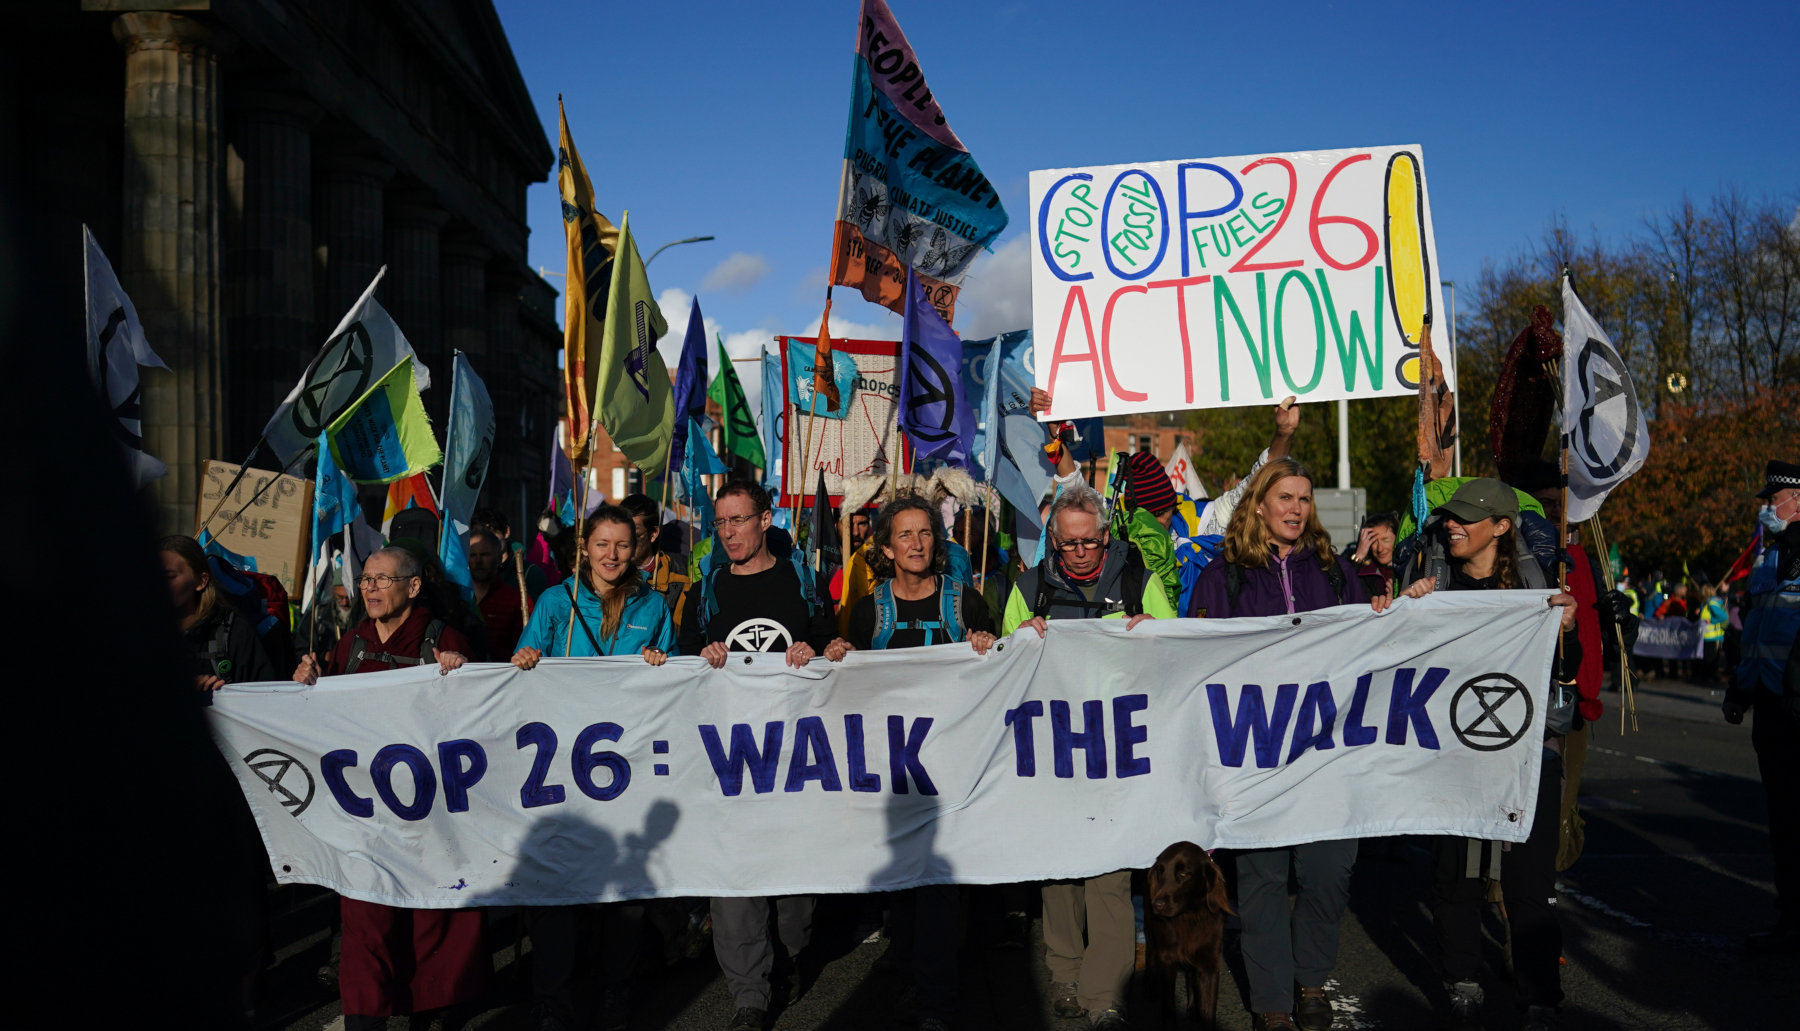 COP26 στη σκιά της AUKUS: Η ατμόσφαιρα ηλεκτρισμένη, προειδοποίηση προς Γαλλία και Βρετανία